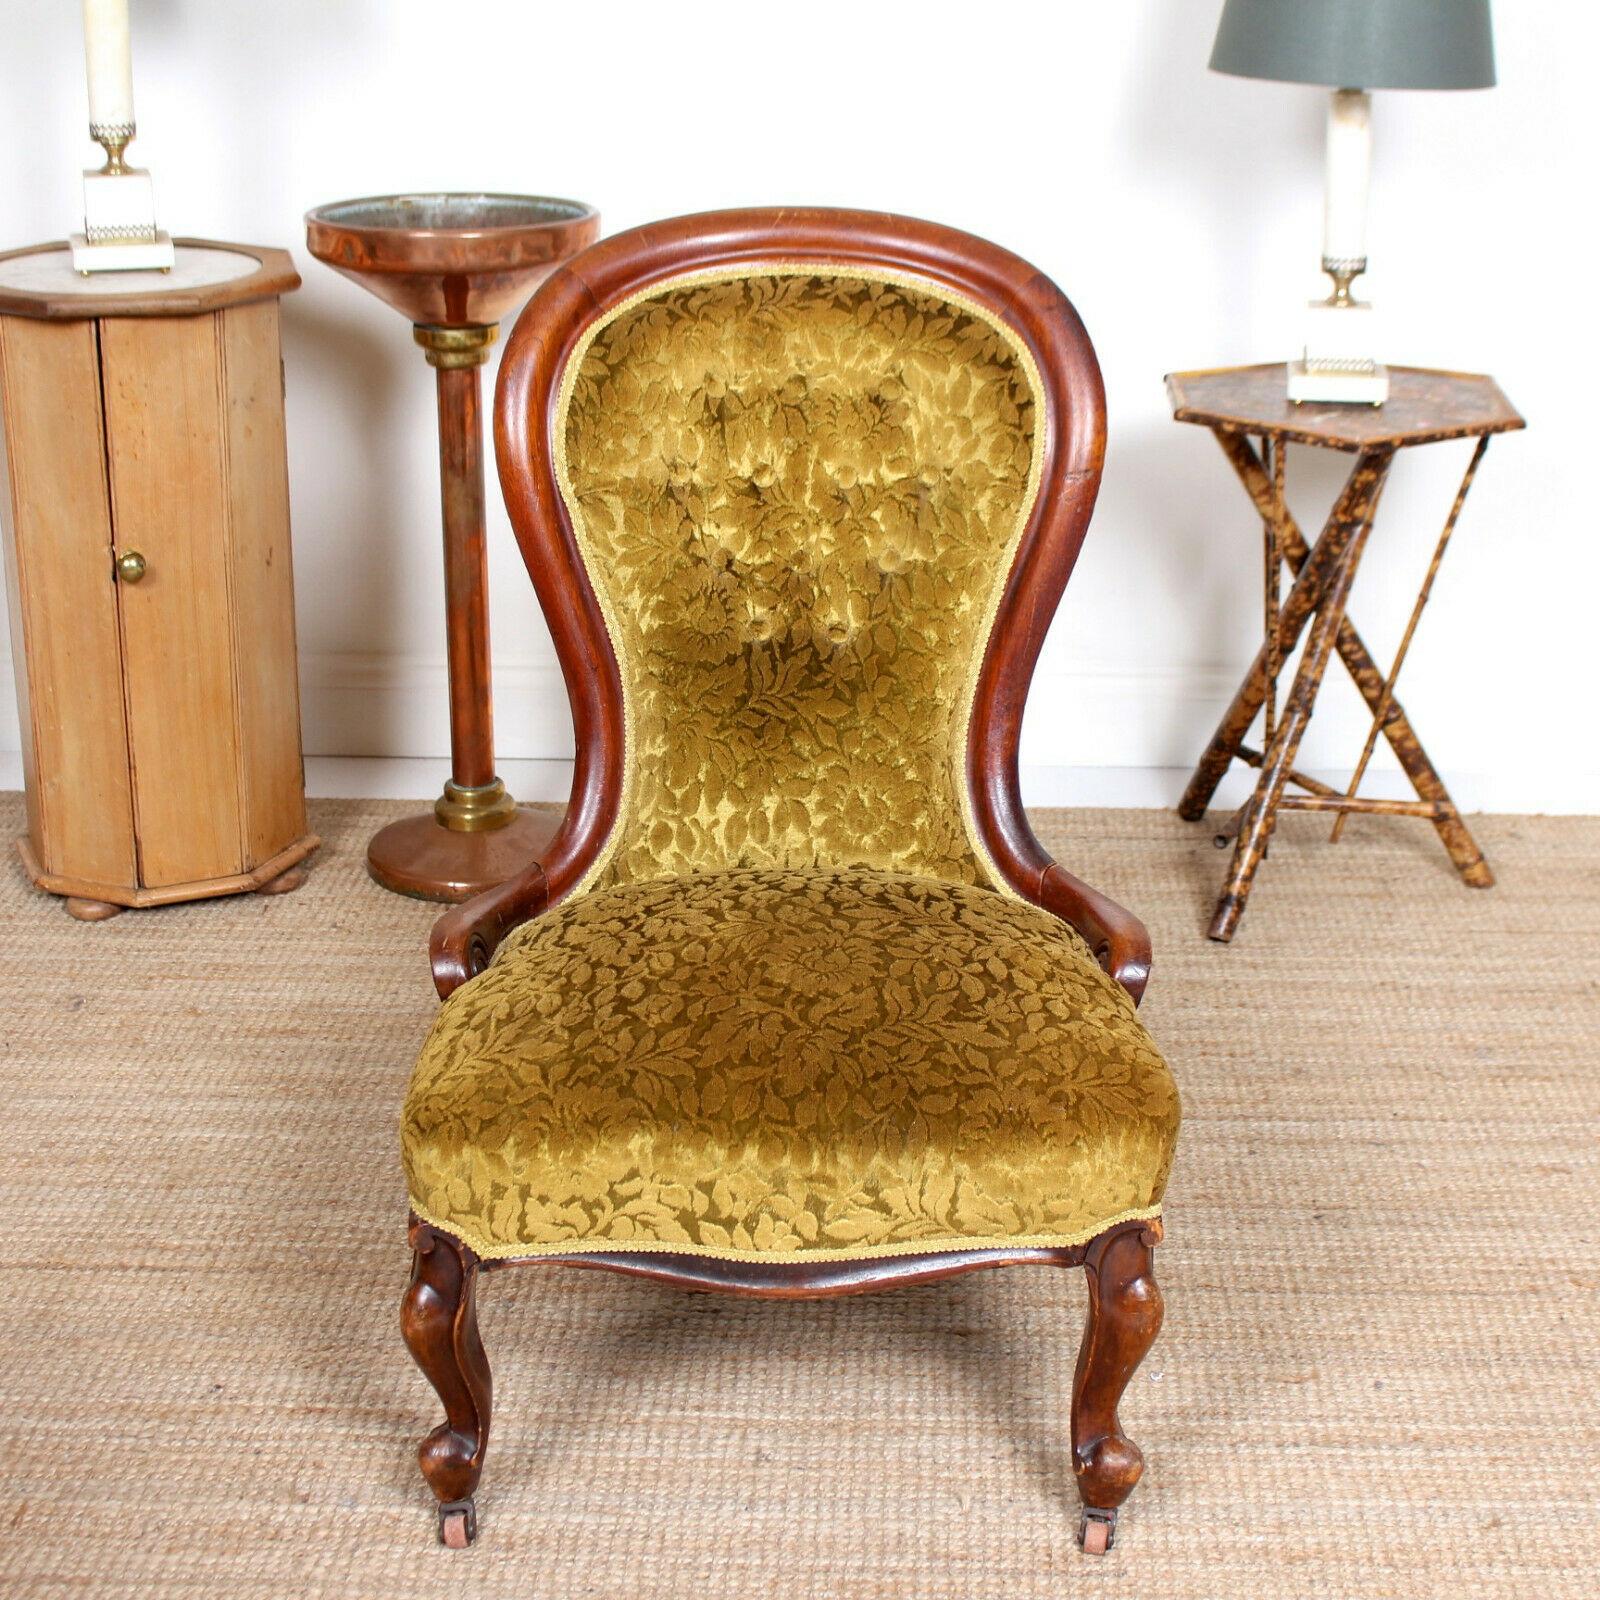 English Spoon Lounge Chair 19th Century Walnut Nursing Chair For Sale 5